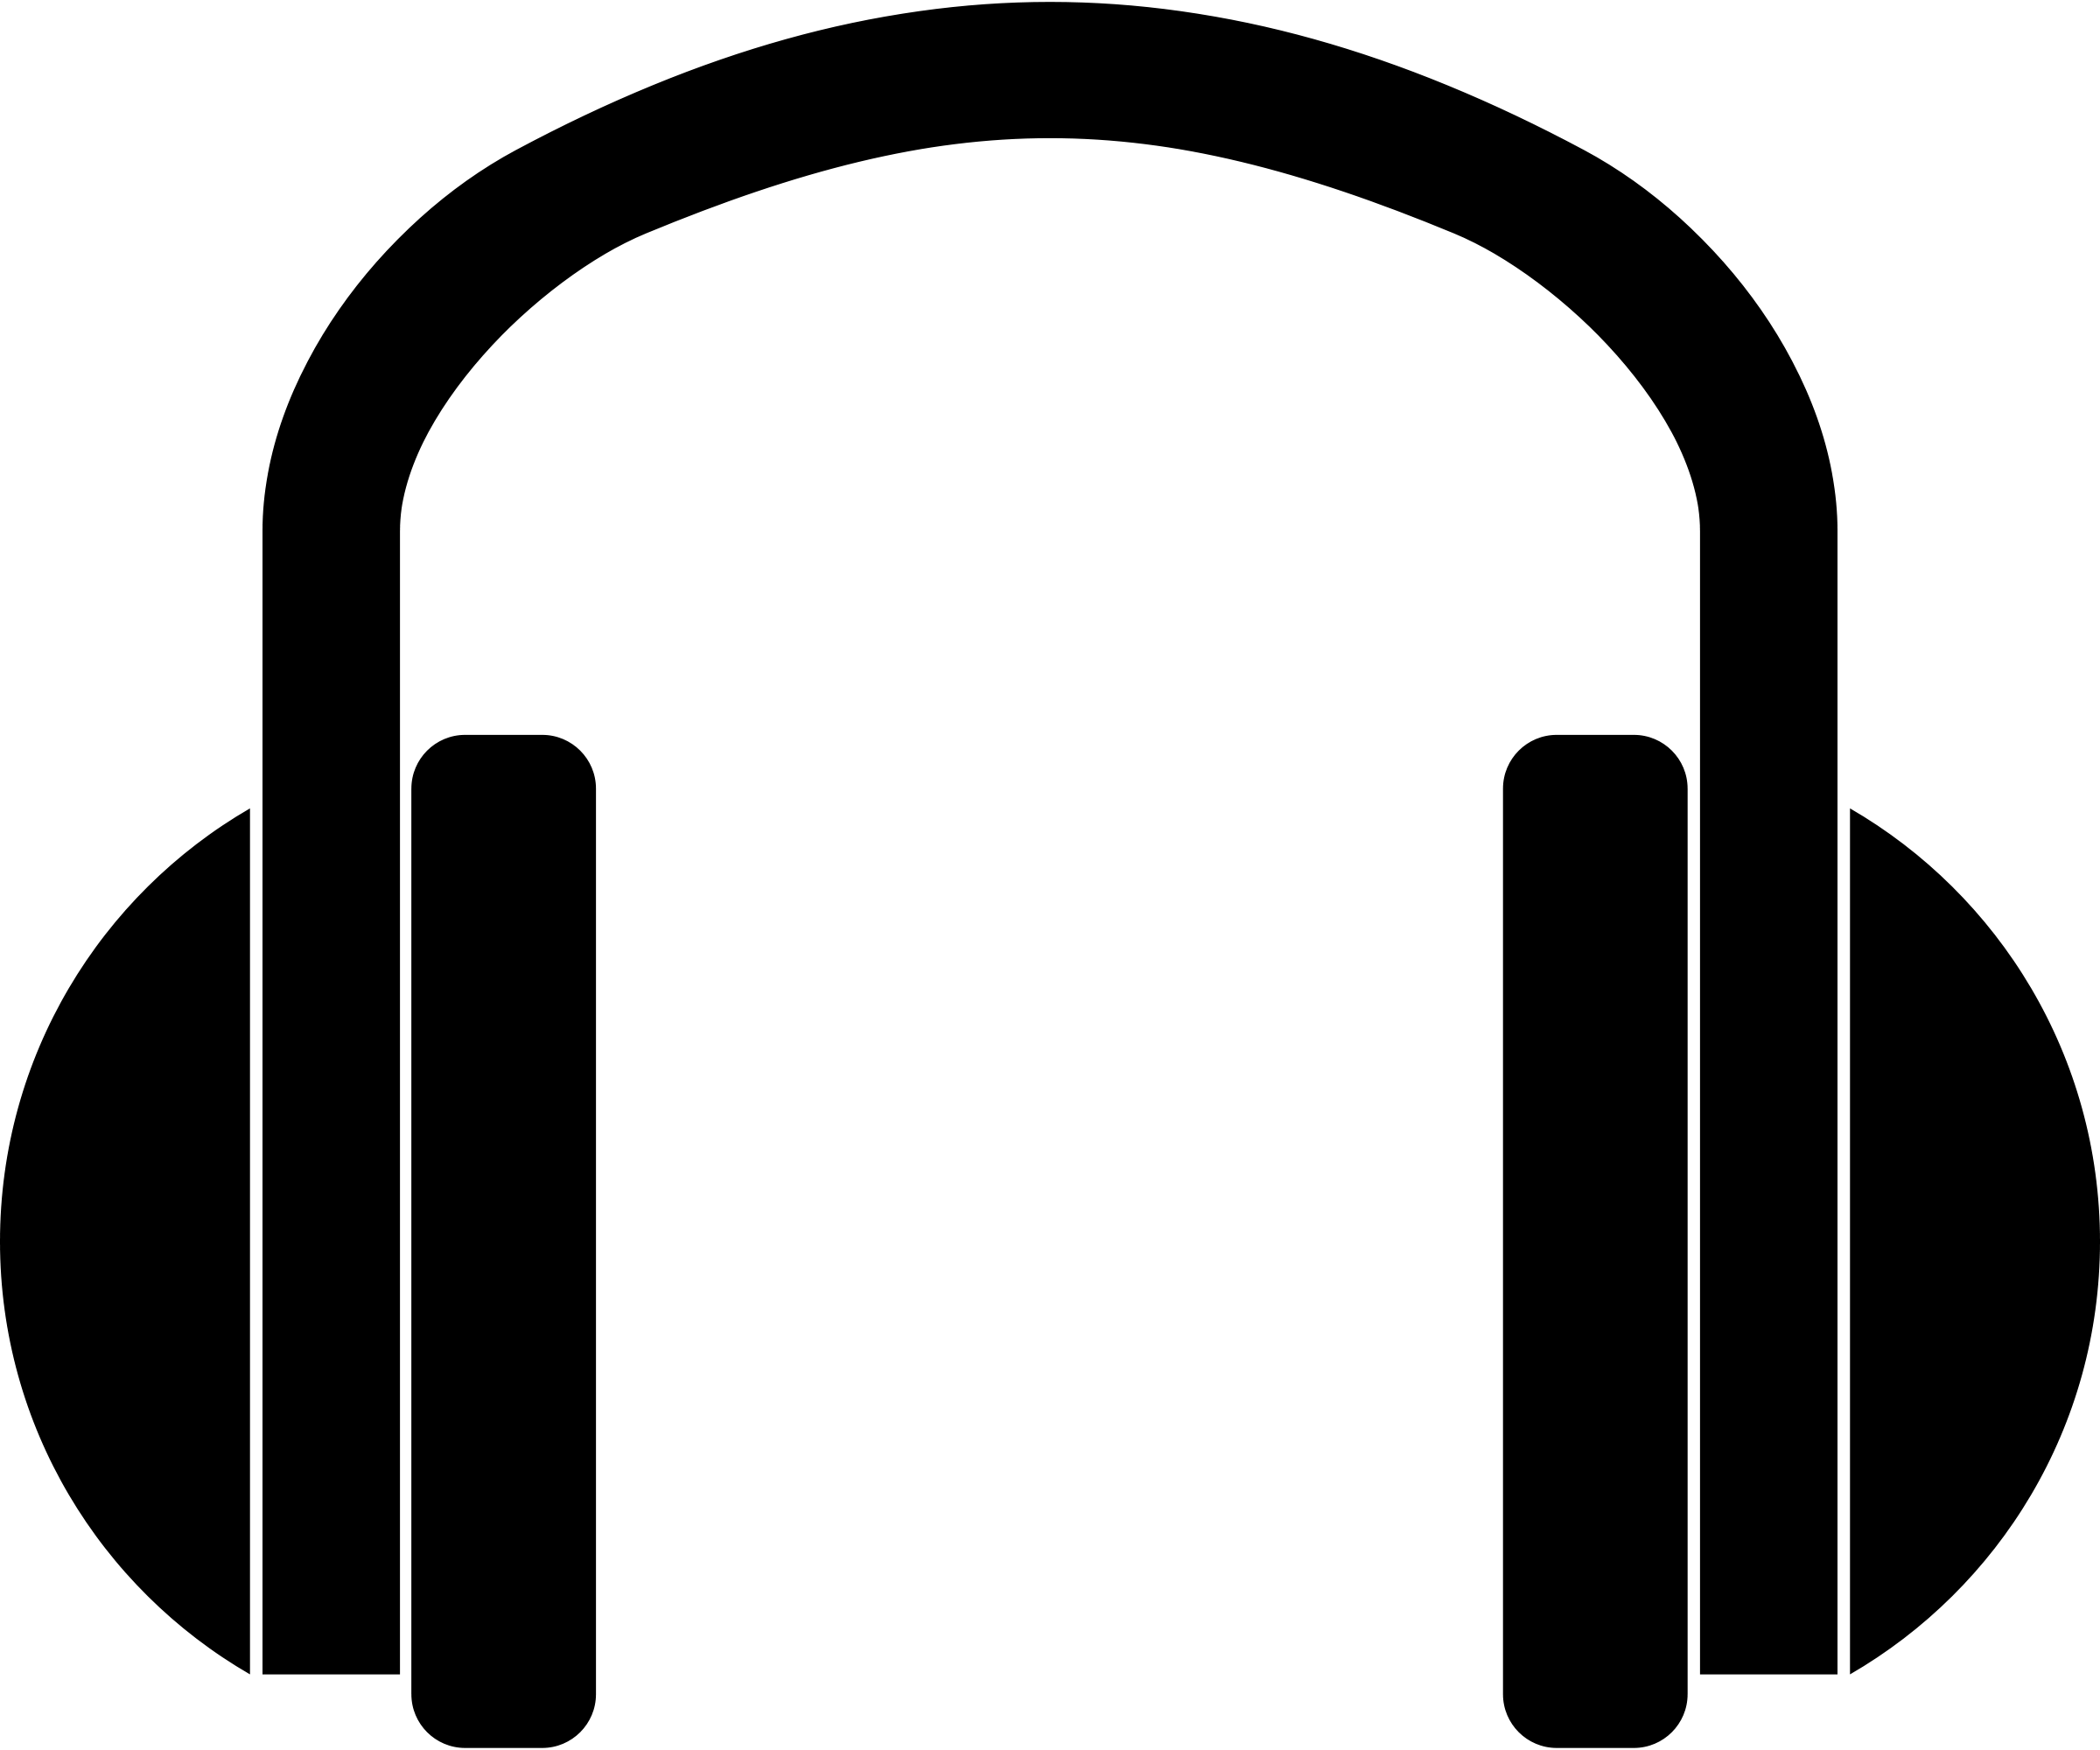 Earphone Logo - Headphones PNG images free download